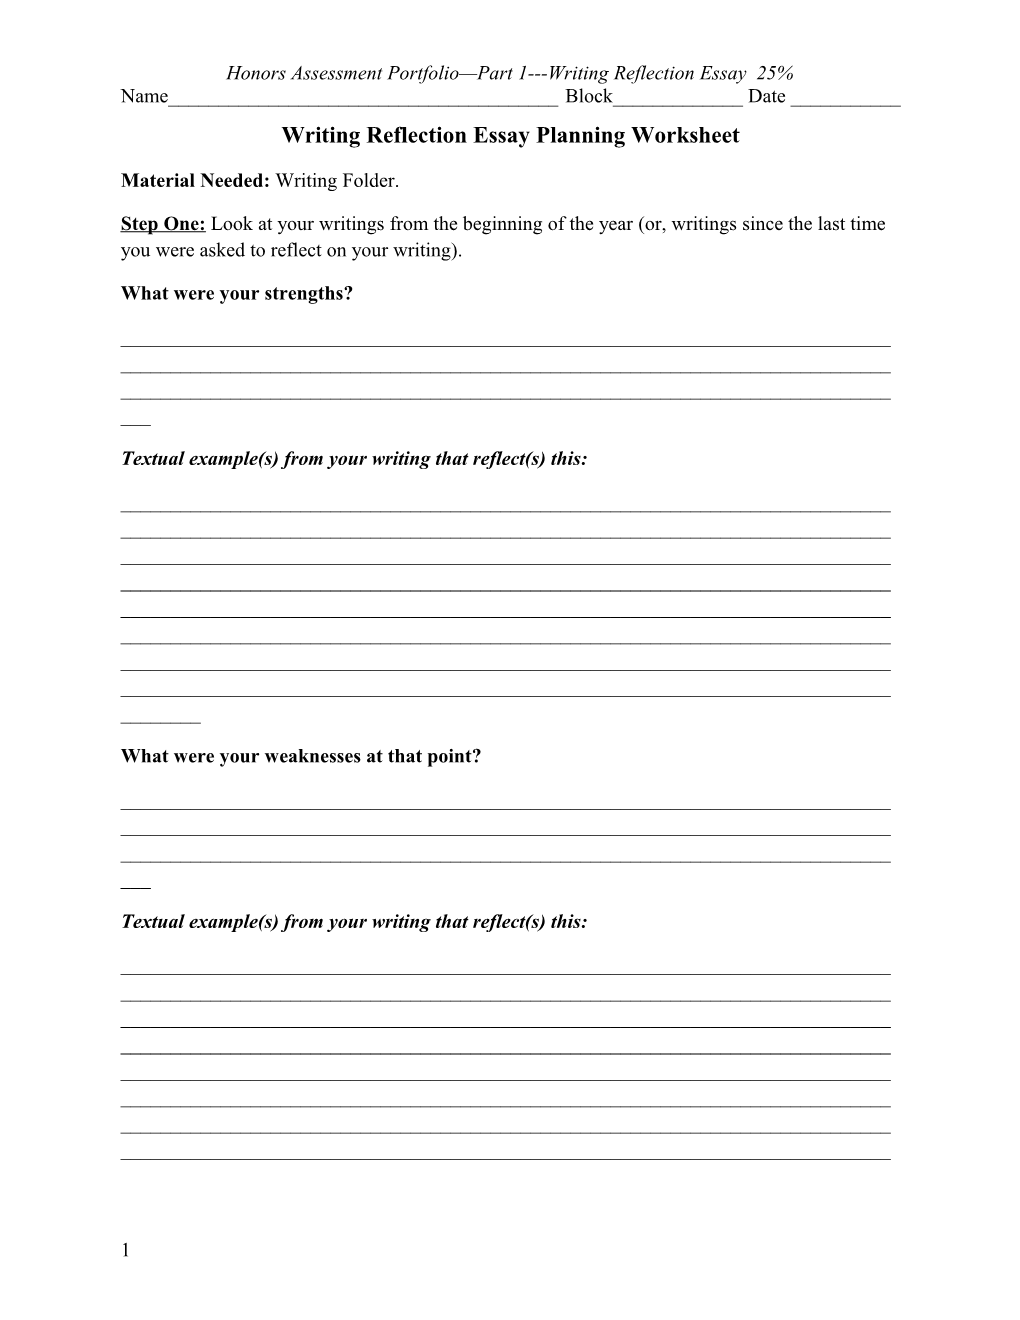 Writing Reflection Essay Planning Worksheet